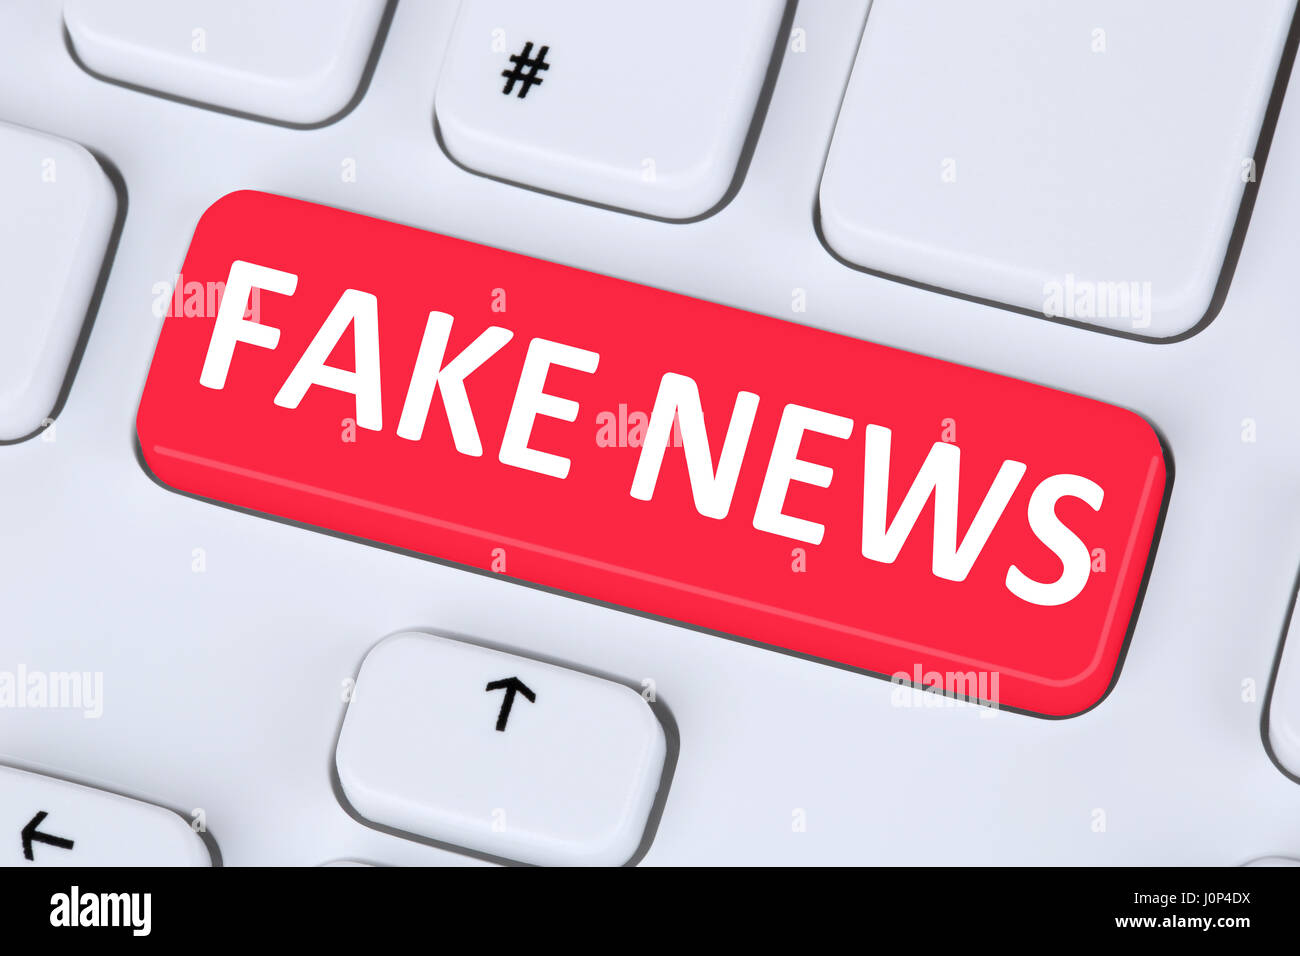 Fake news truth lie media internet button online computer keyboard symbol Stock Photo